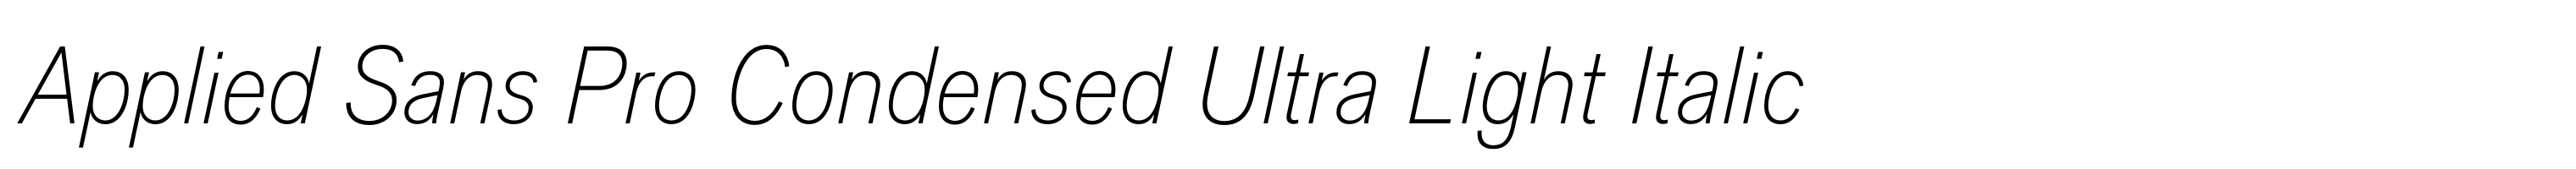 Applied Sans Pro Condensed Ultra Light Italic